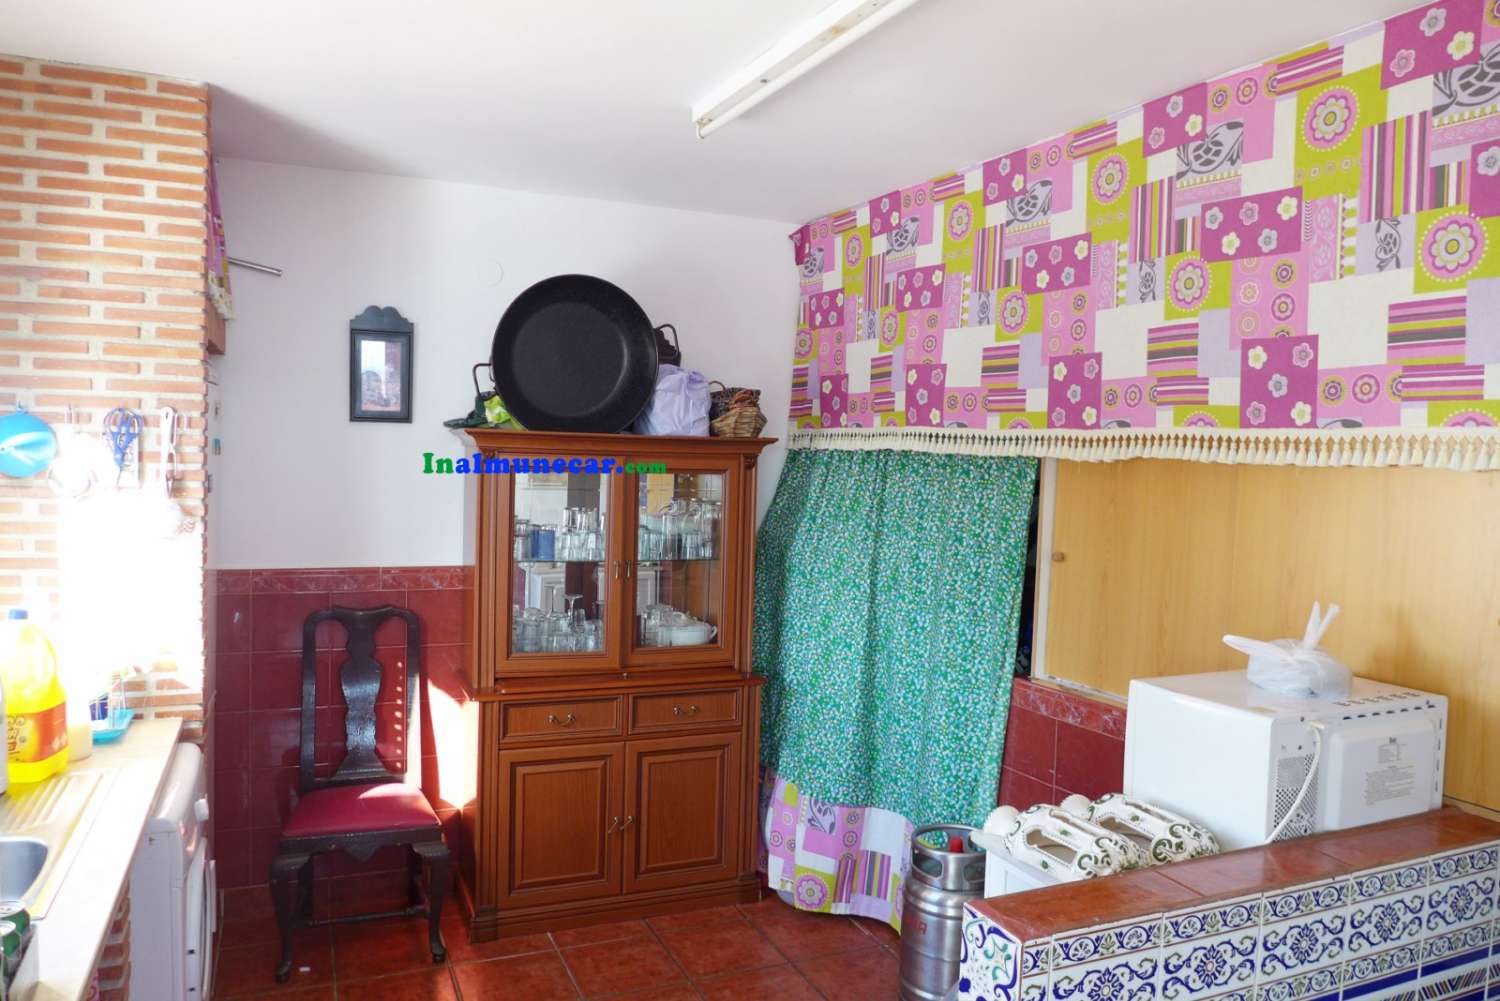 House for sale in Almuñécar, in the Old Town in San Miguel Castle neighbourhood